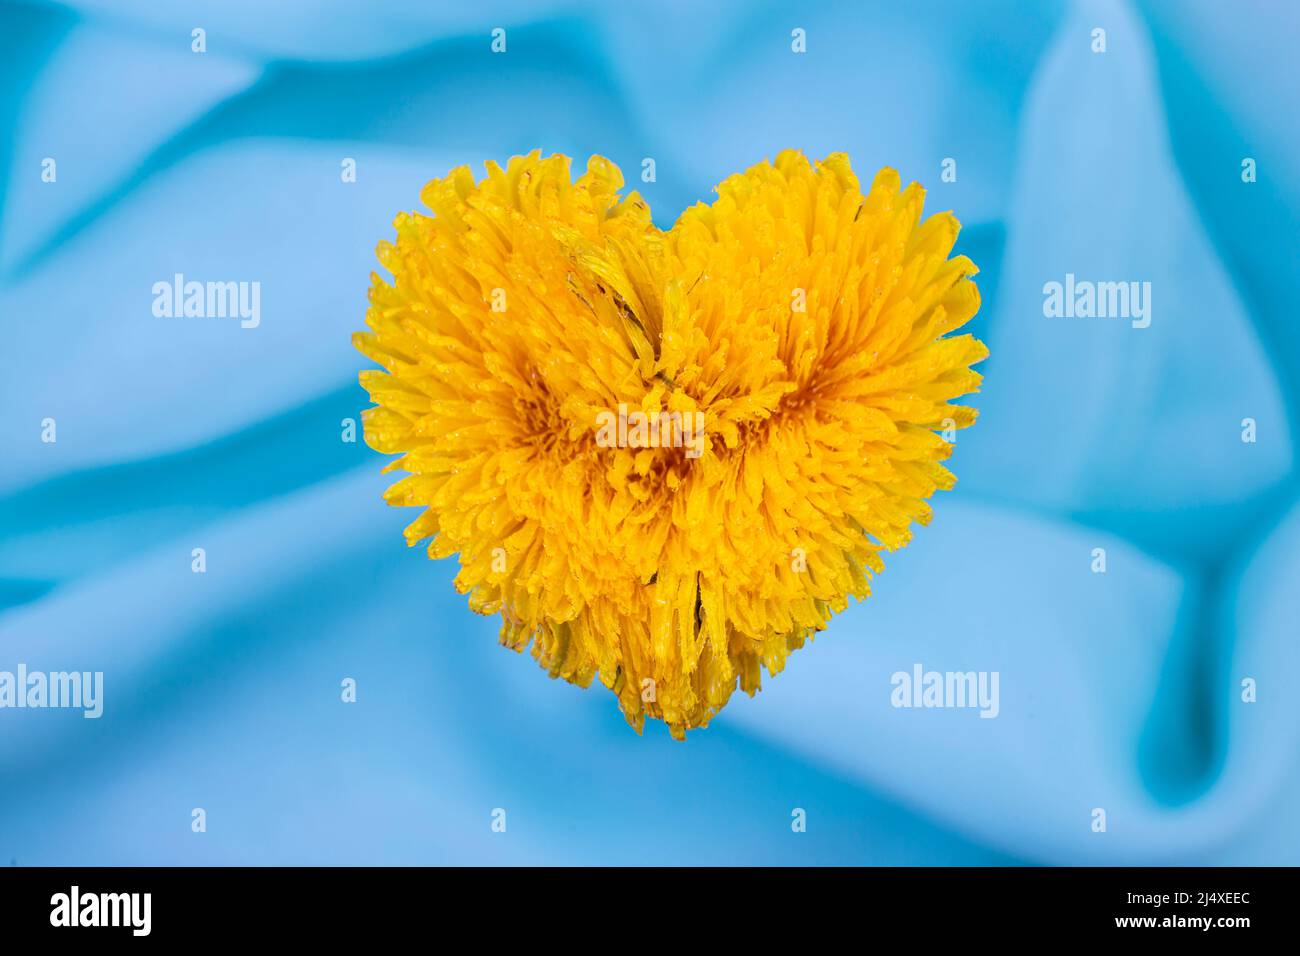 Taraxacum officinale, heart shaped dandelion,  flower on turquoise silky background Stock Photo